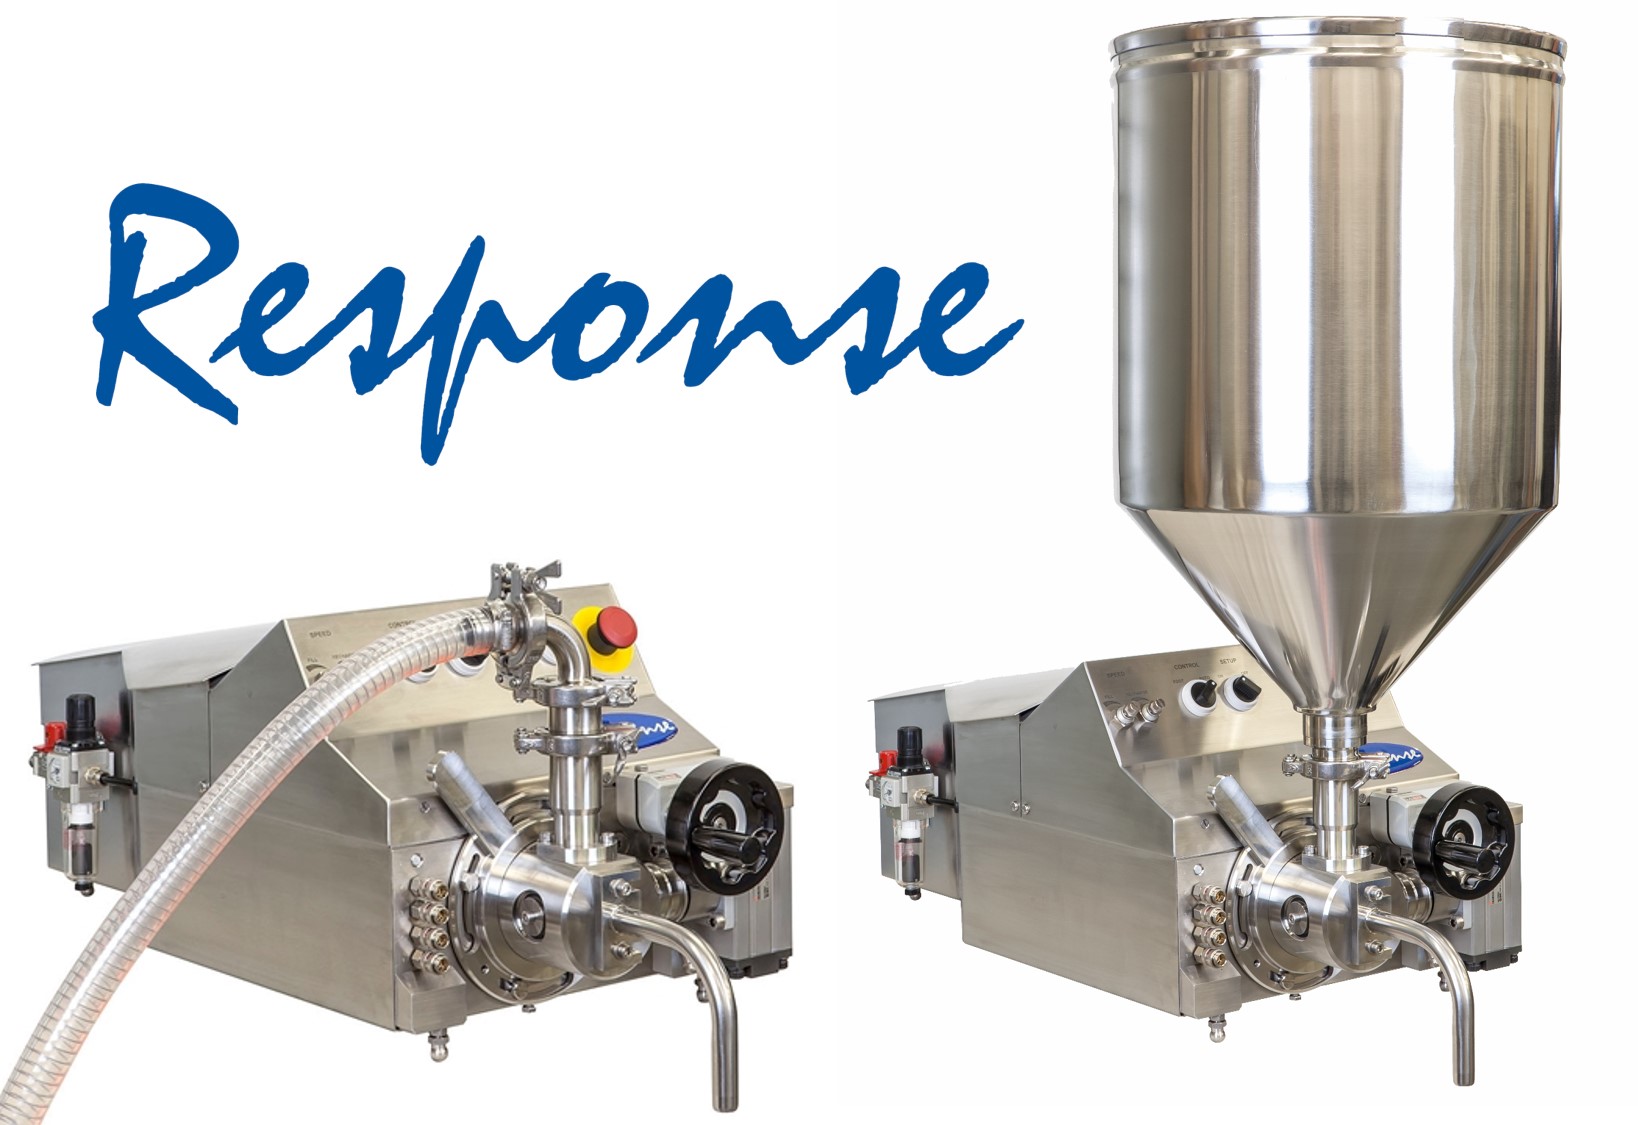 Response benchtop volumetric liquid filling machine